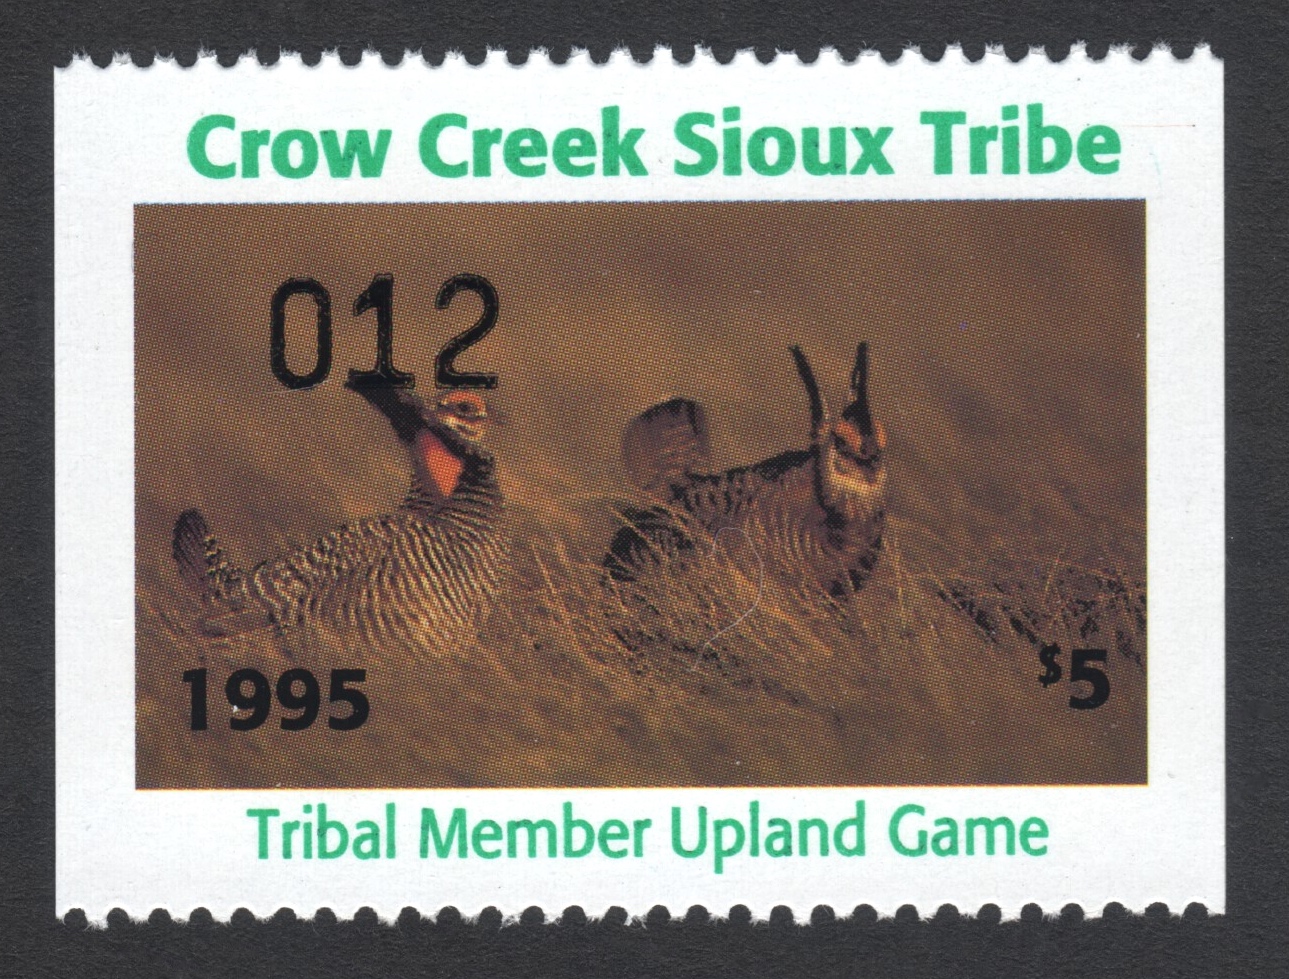 1995 Crow Creek Tribal Member Upland Game